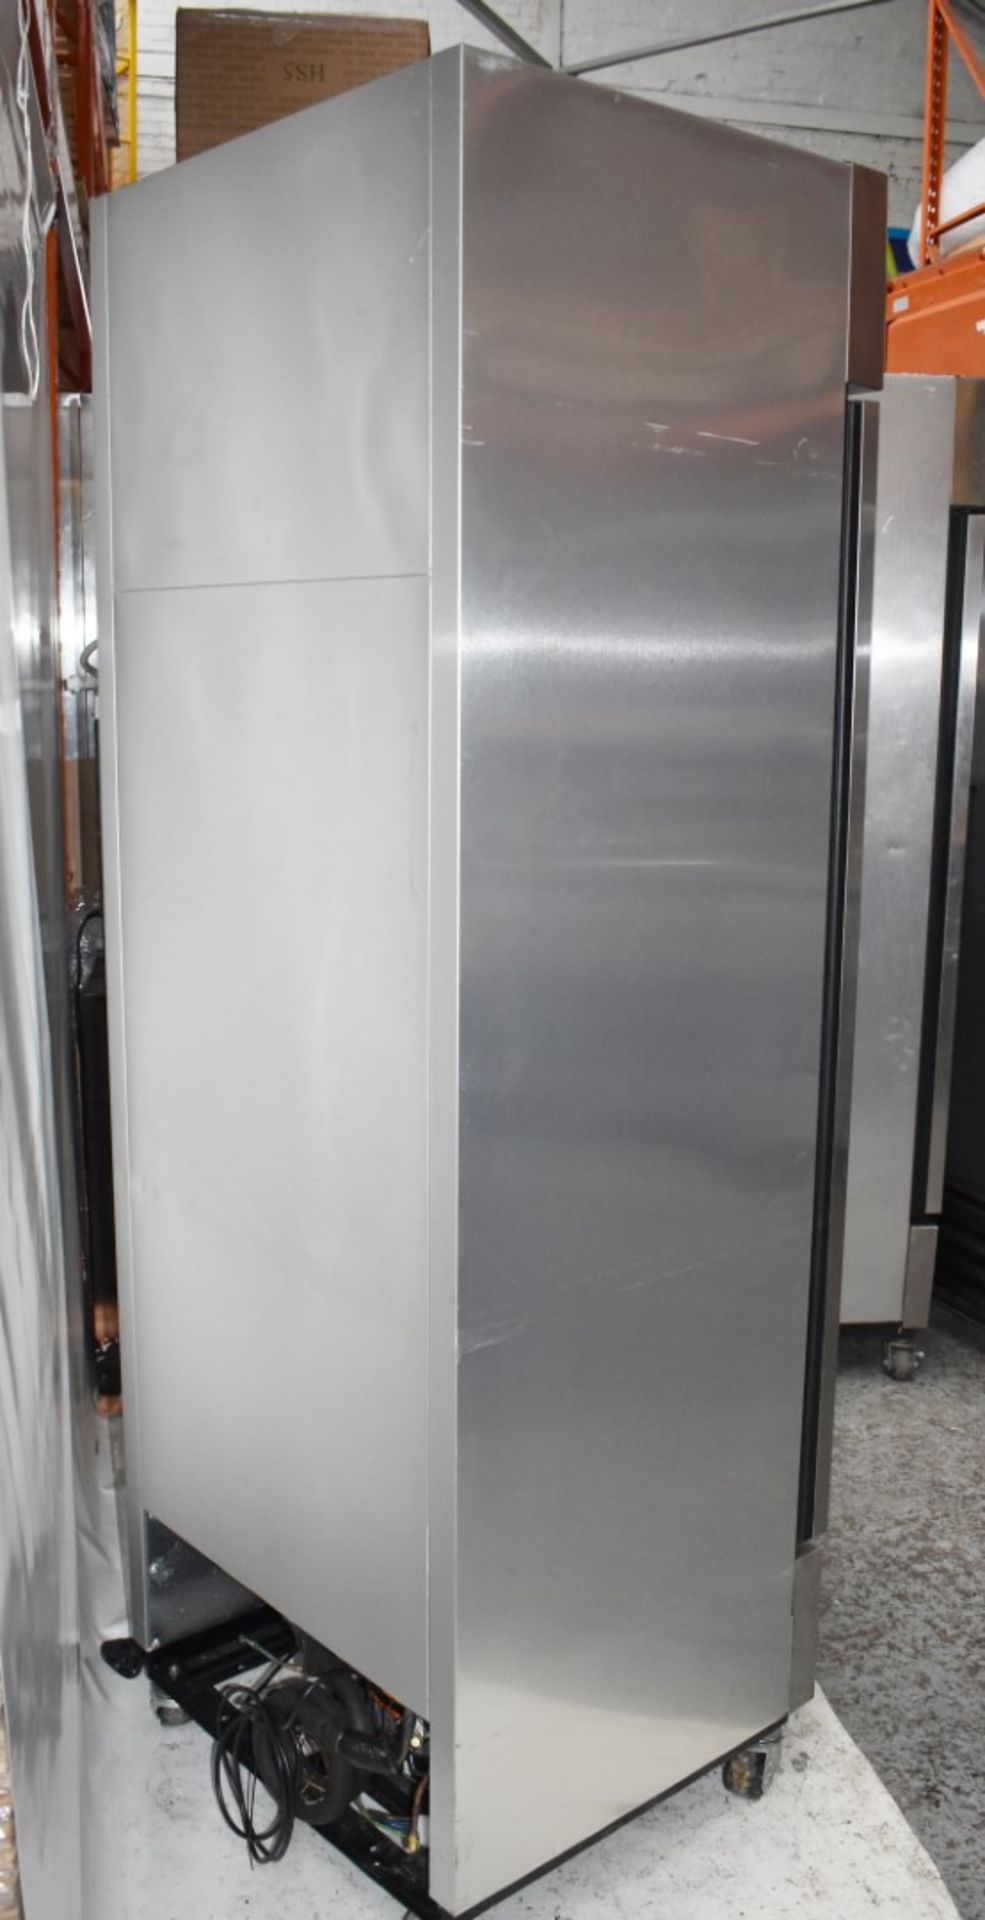 1 x True T-19FZ Upright Single Solid Door Freezer - Stainless Steel Finish With Aluminium Interior - - Image 8 of 8